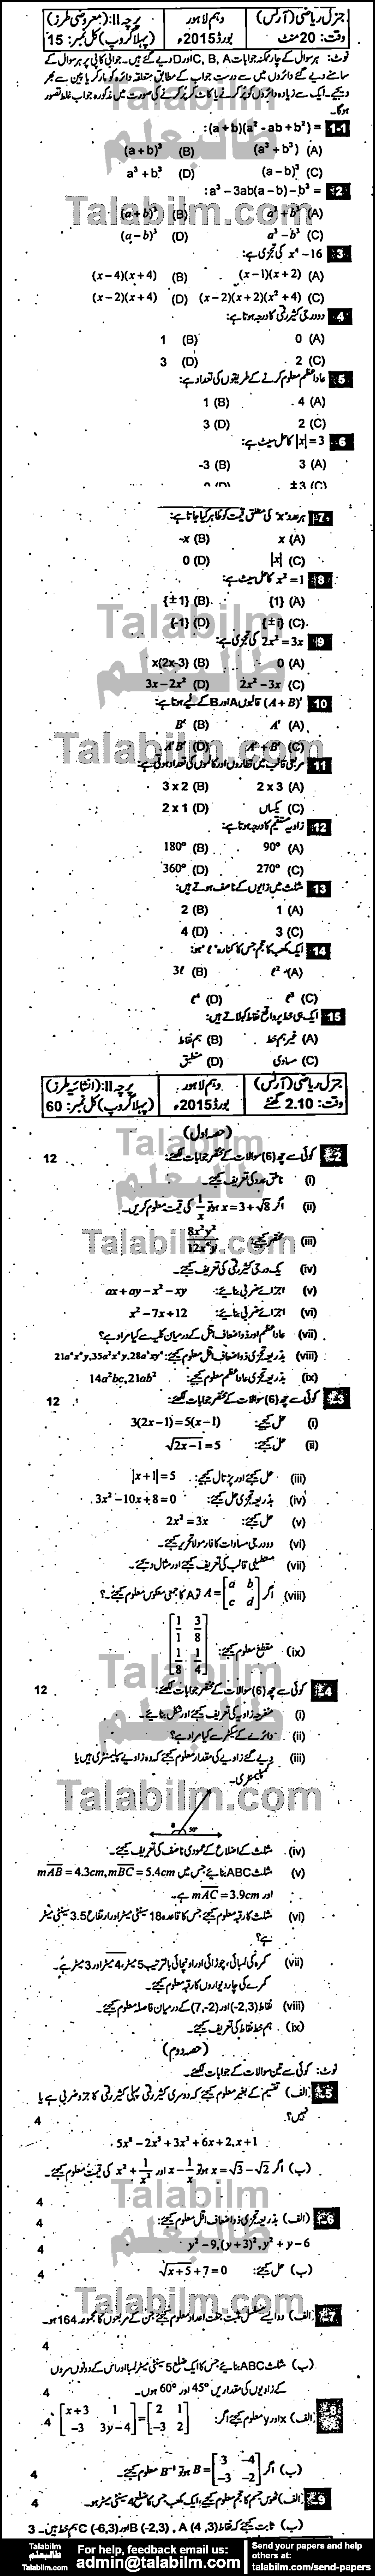 General Math 0 past paper for Urdu Medium 2015 Group-I